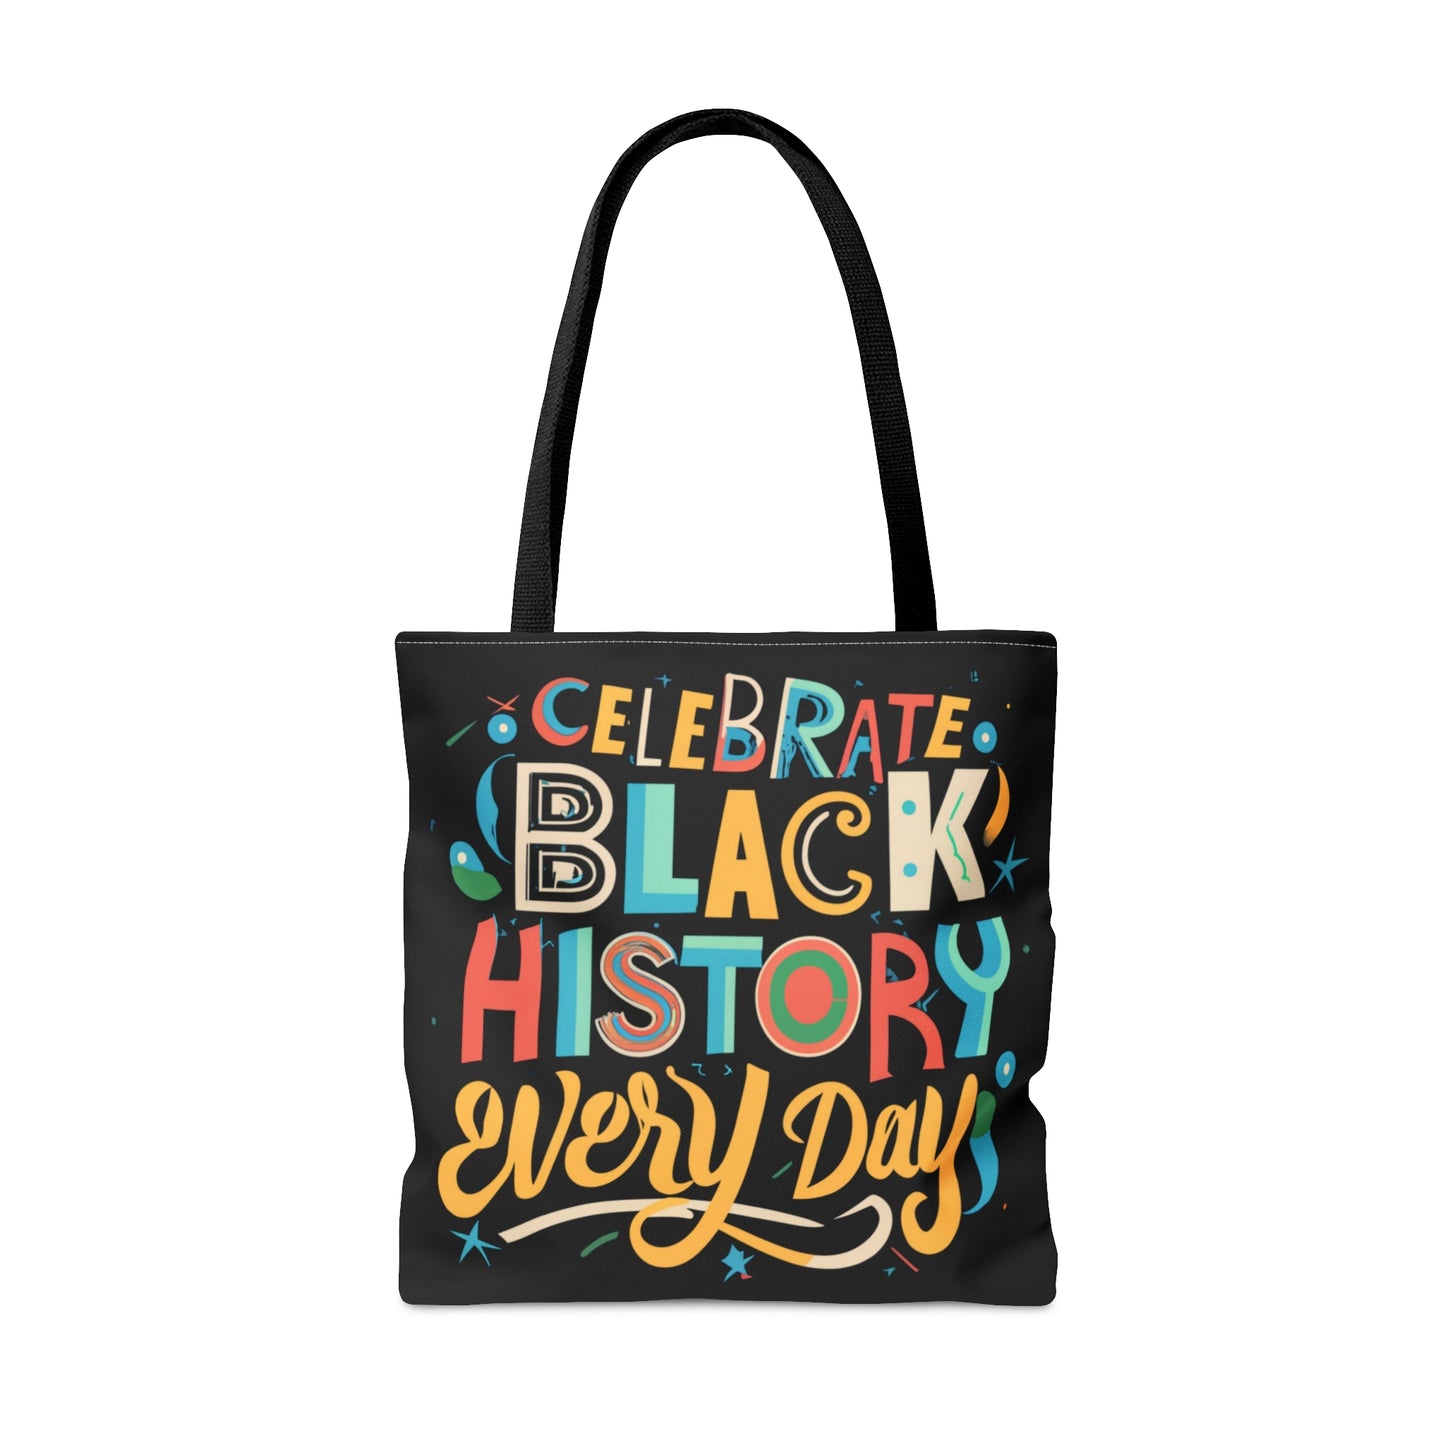 "Celebrate Black History Everyday" -- Tote Bag